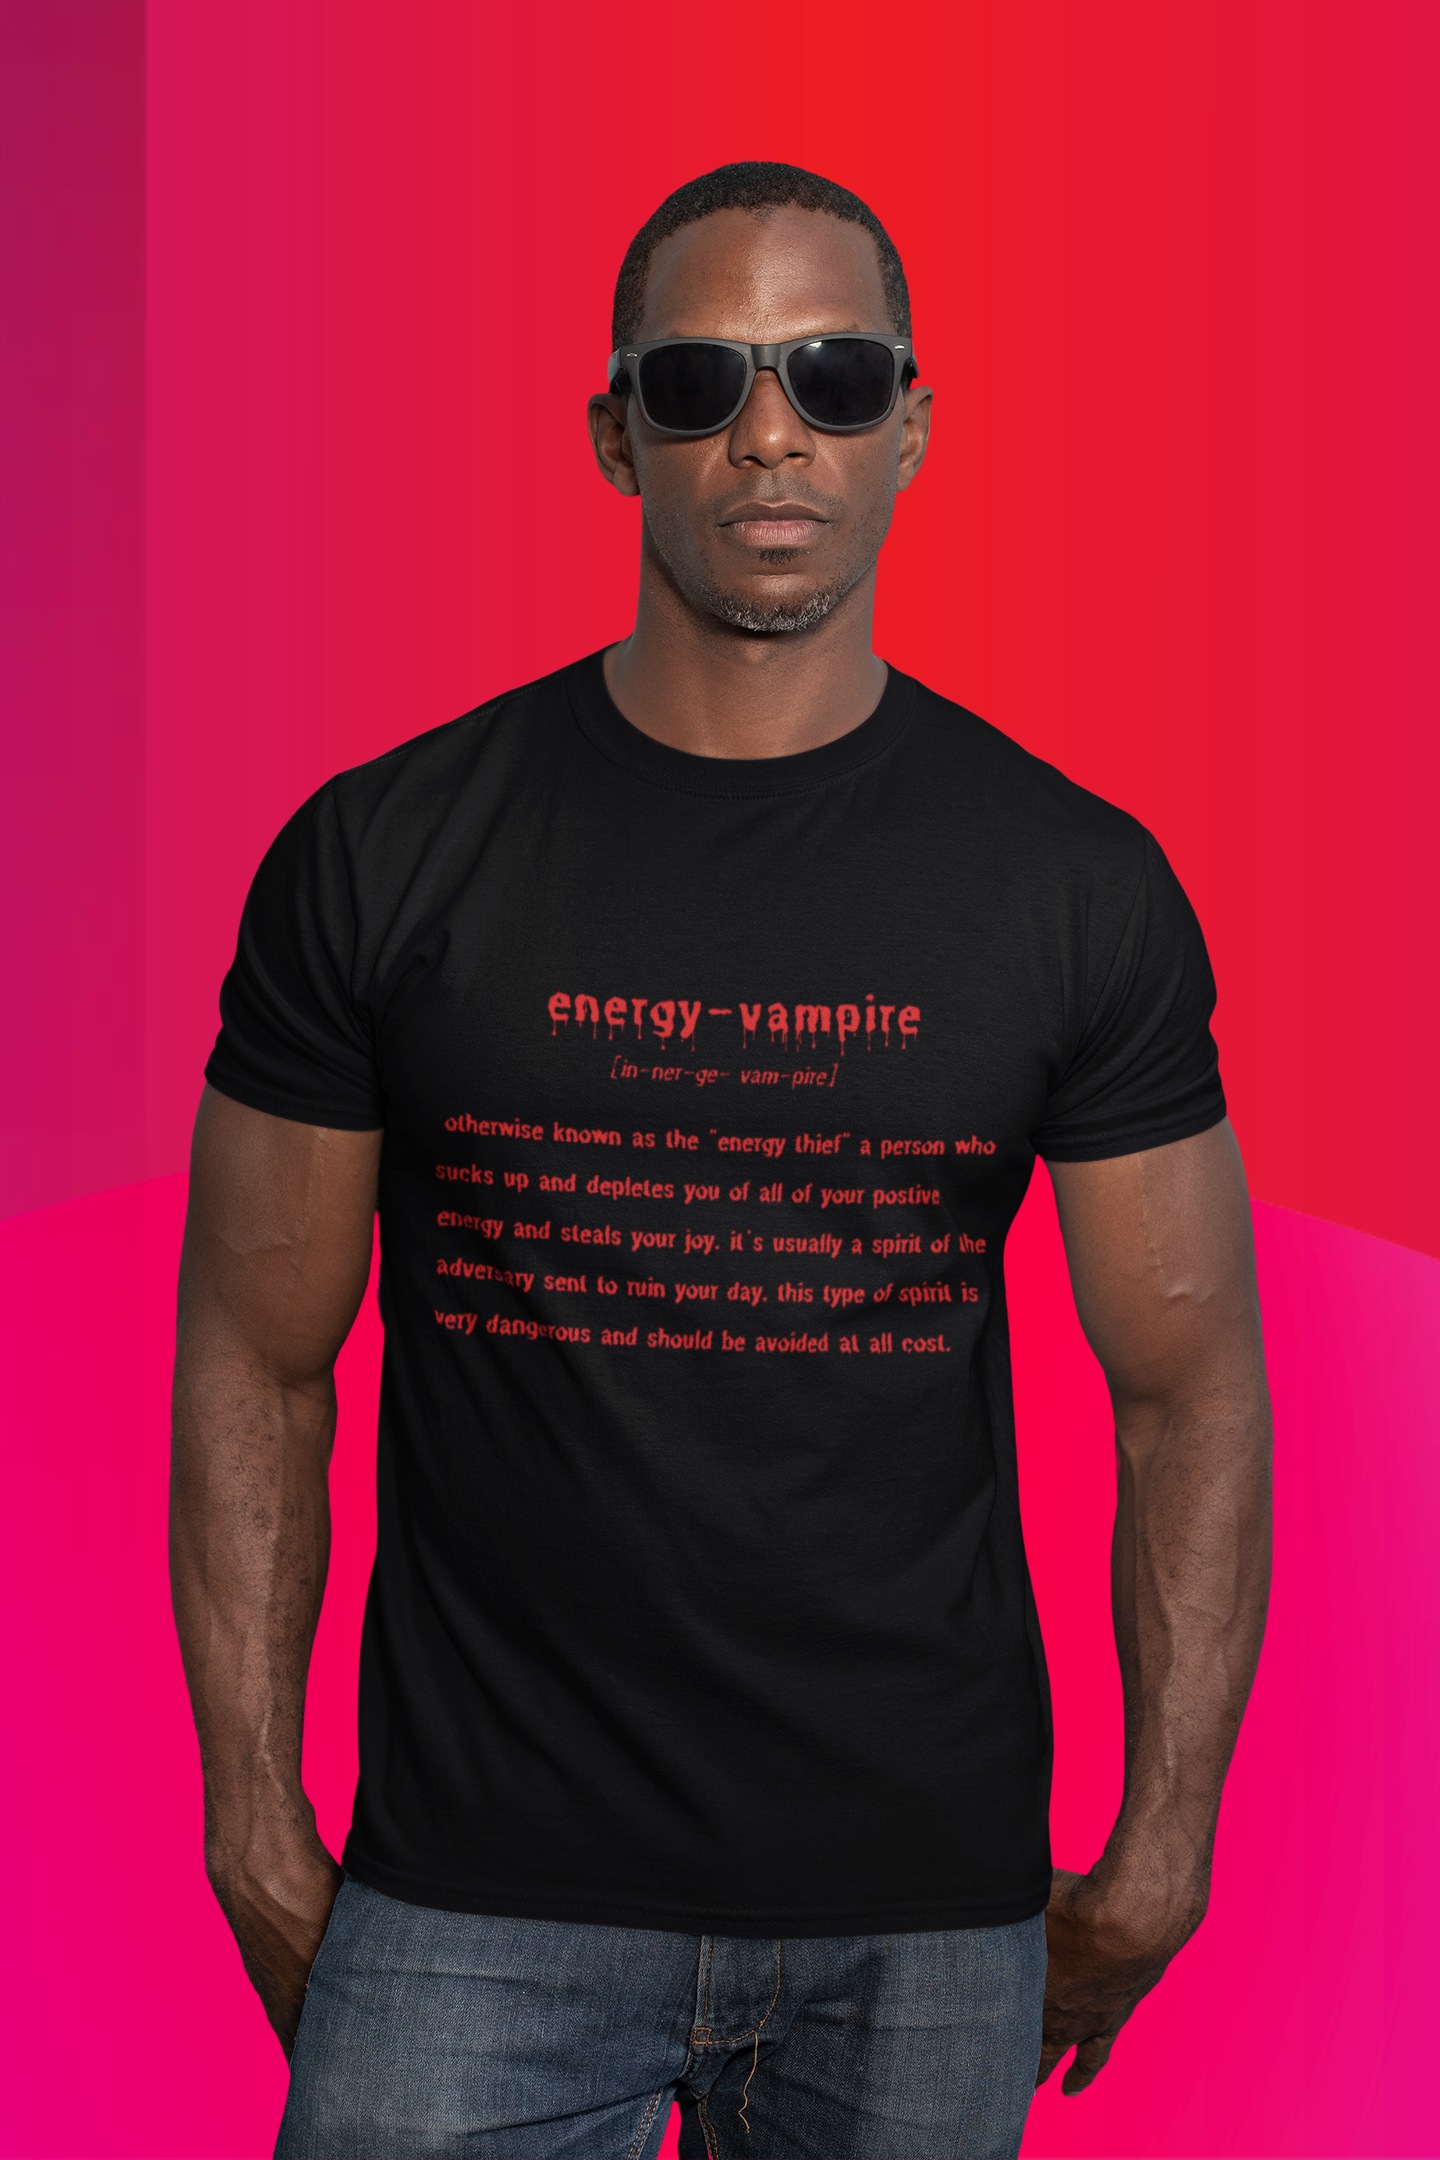 The Energy Vampire Tee